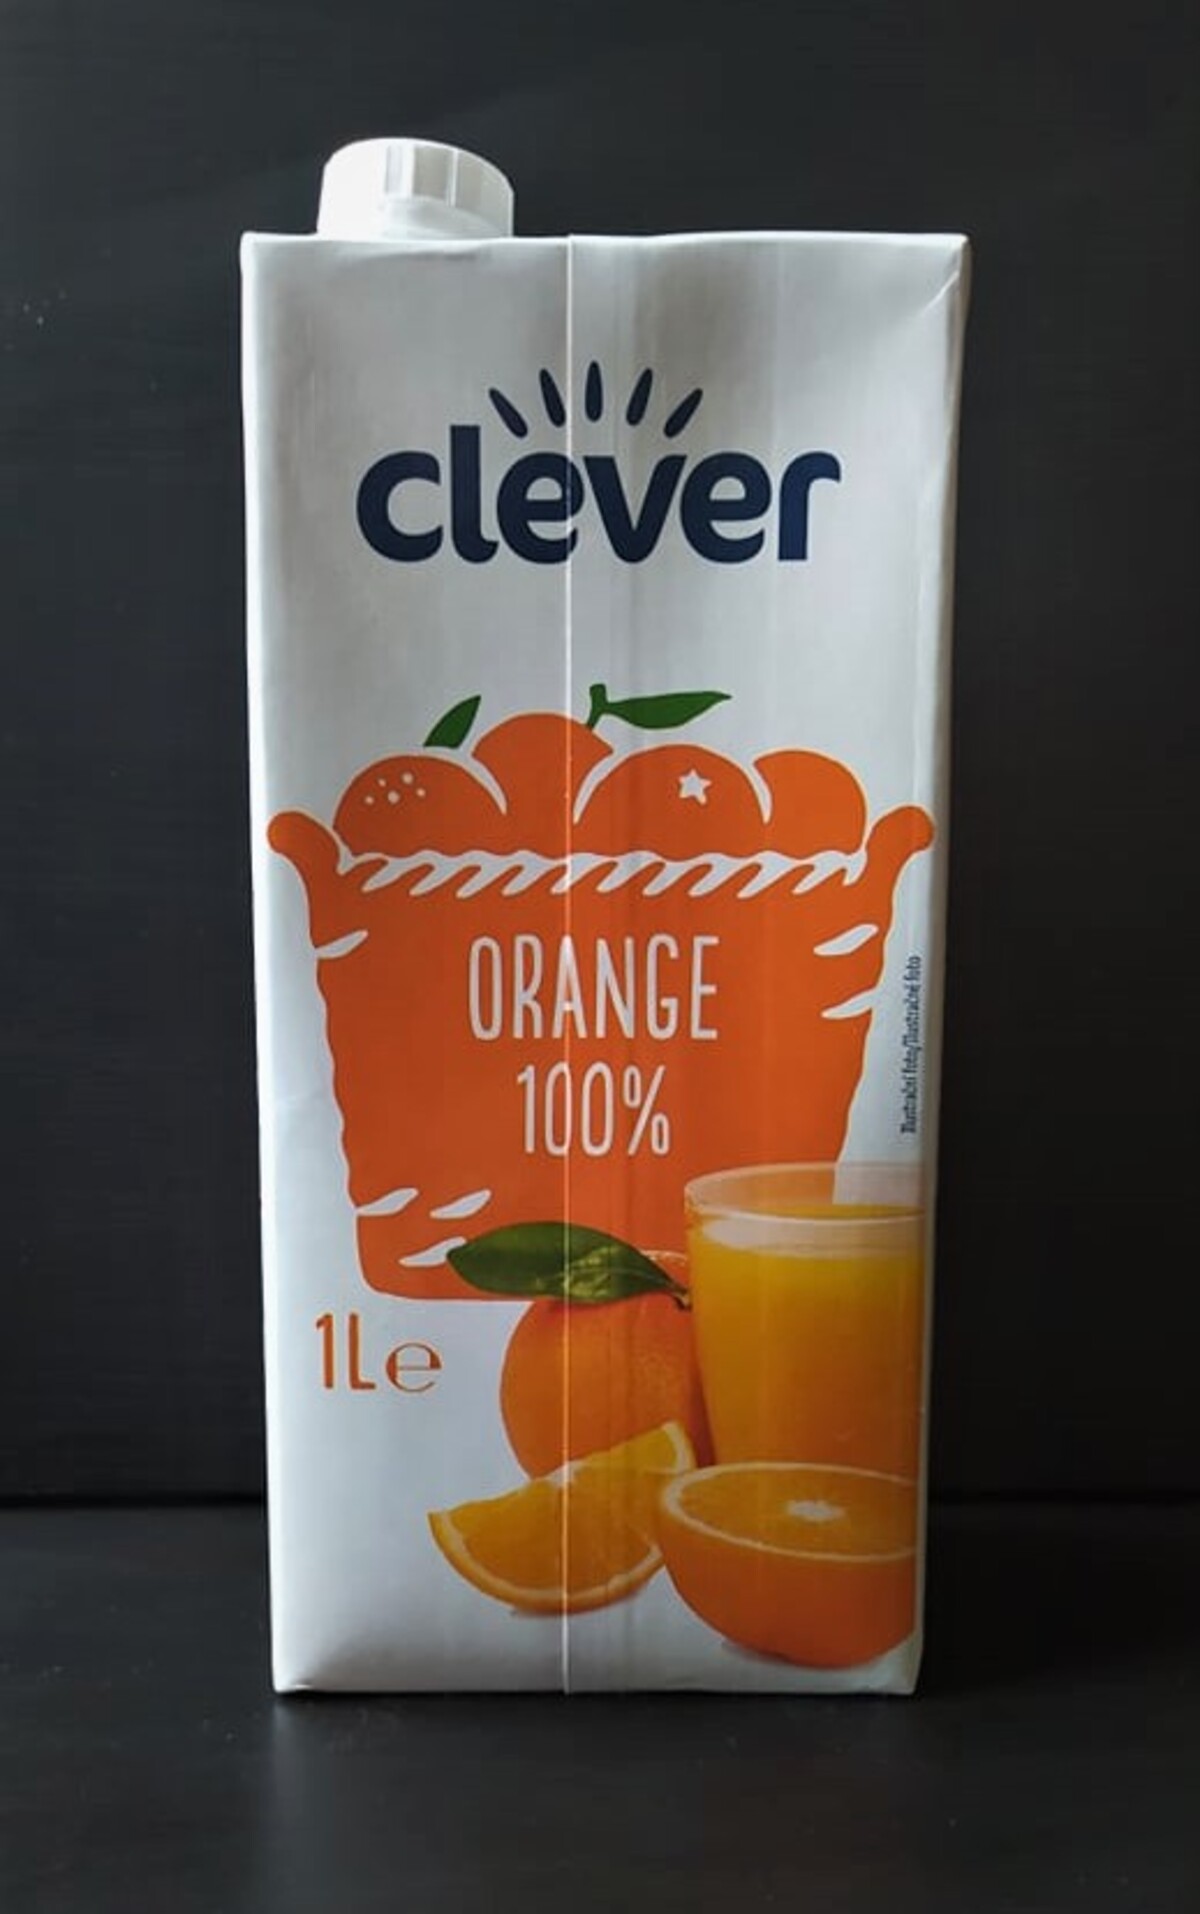 test džus pomeranč 2020 clever